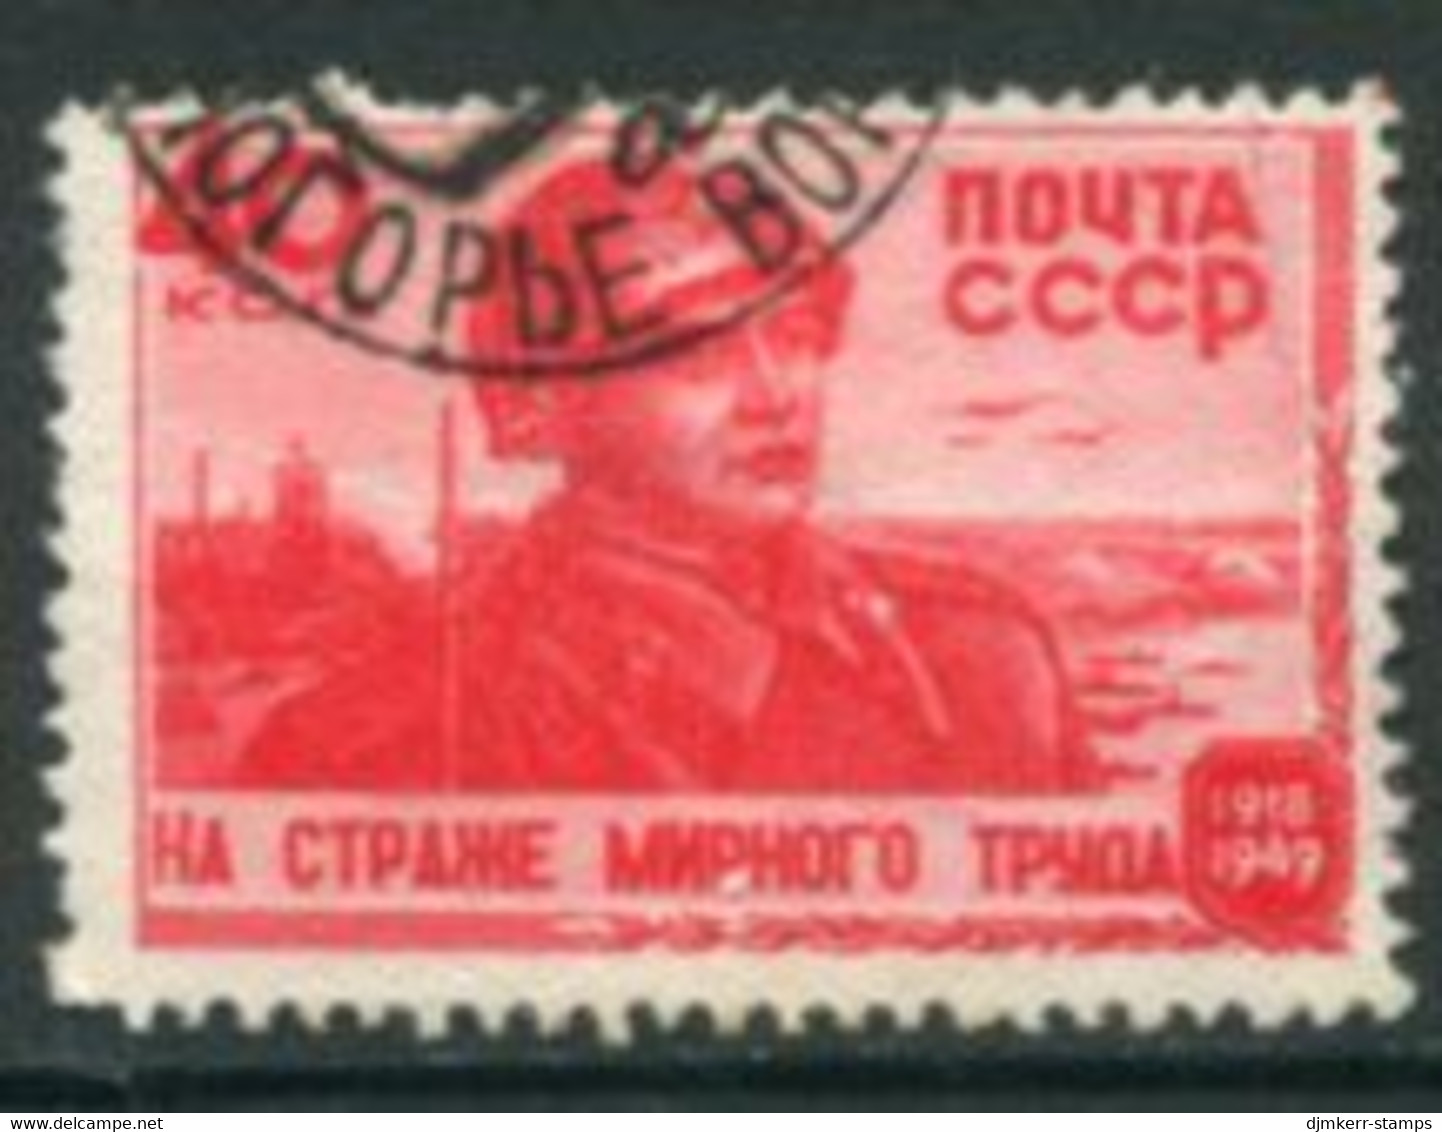 SOVIET UNION 1949 Soviet Army Anniversary Used.  Michel 1327 - Gebruikt